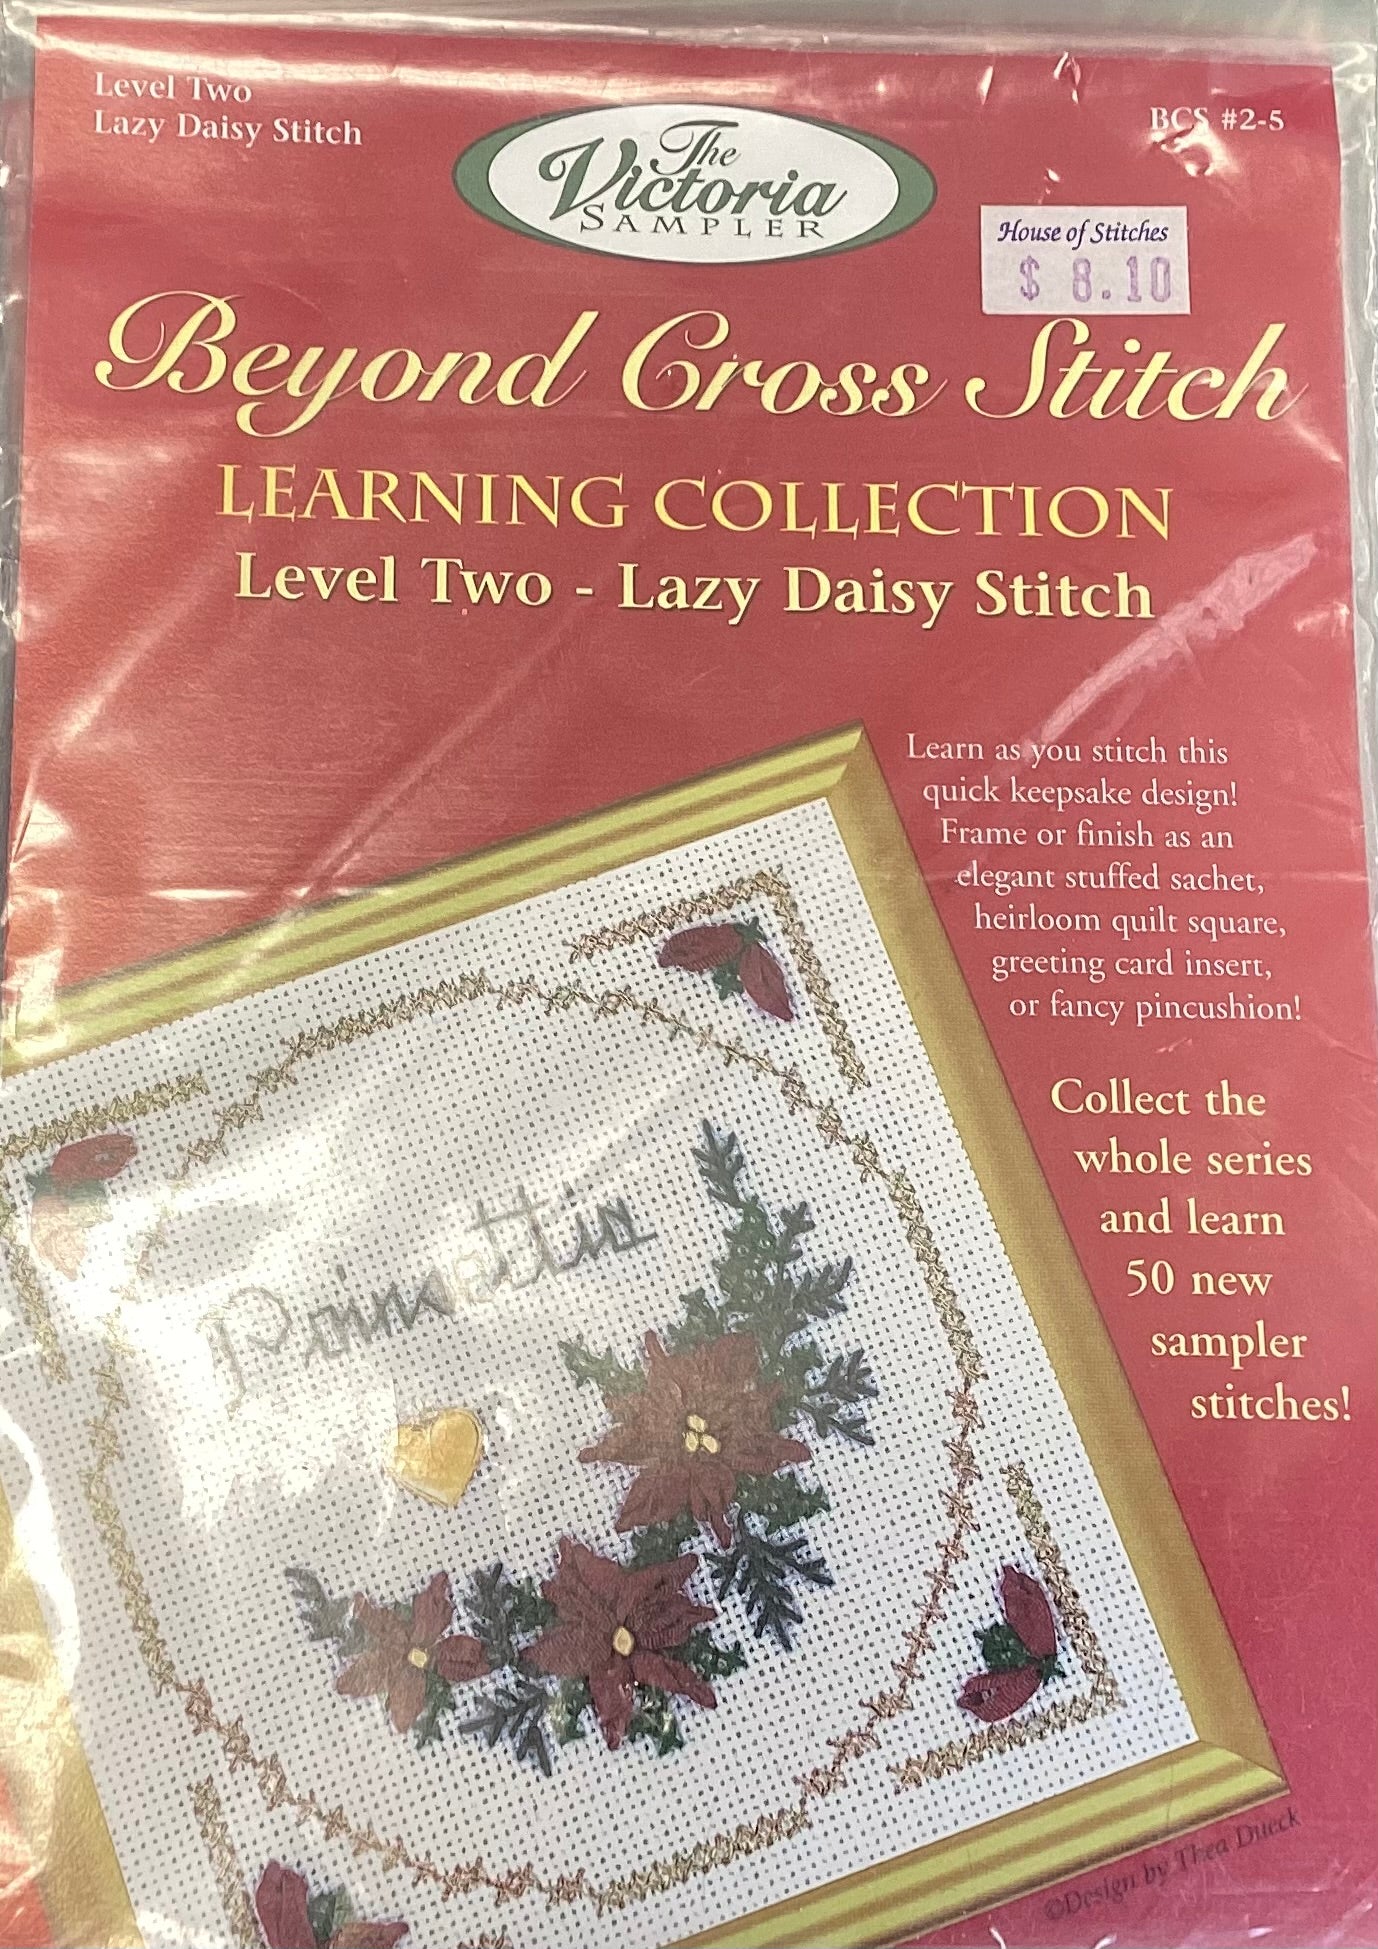 Beyond Cross Stitch Level Two- Lazy Daisy Stitch: Kit by The Victoria Sampler